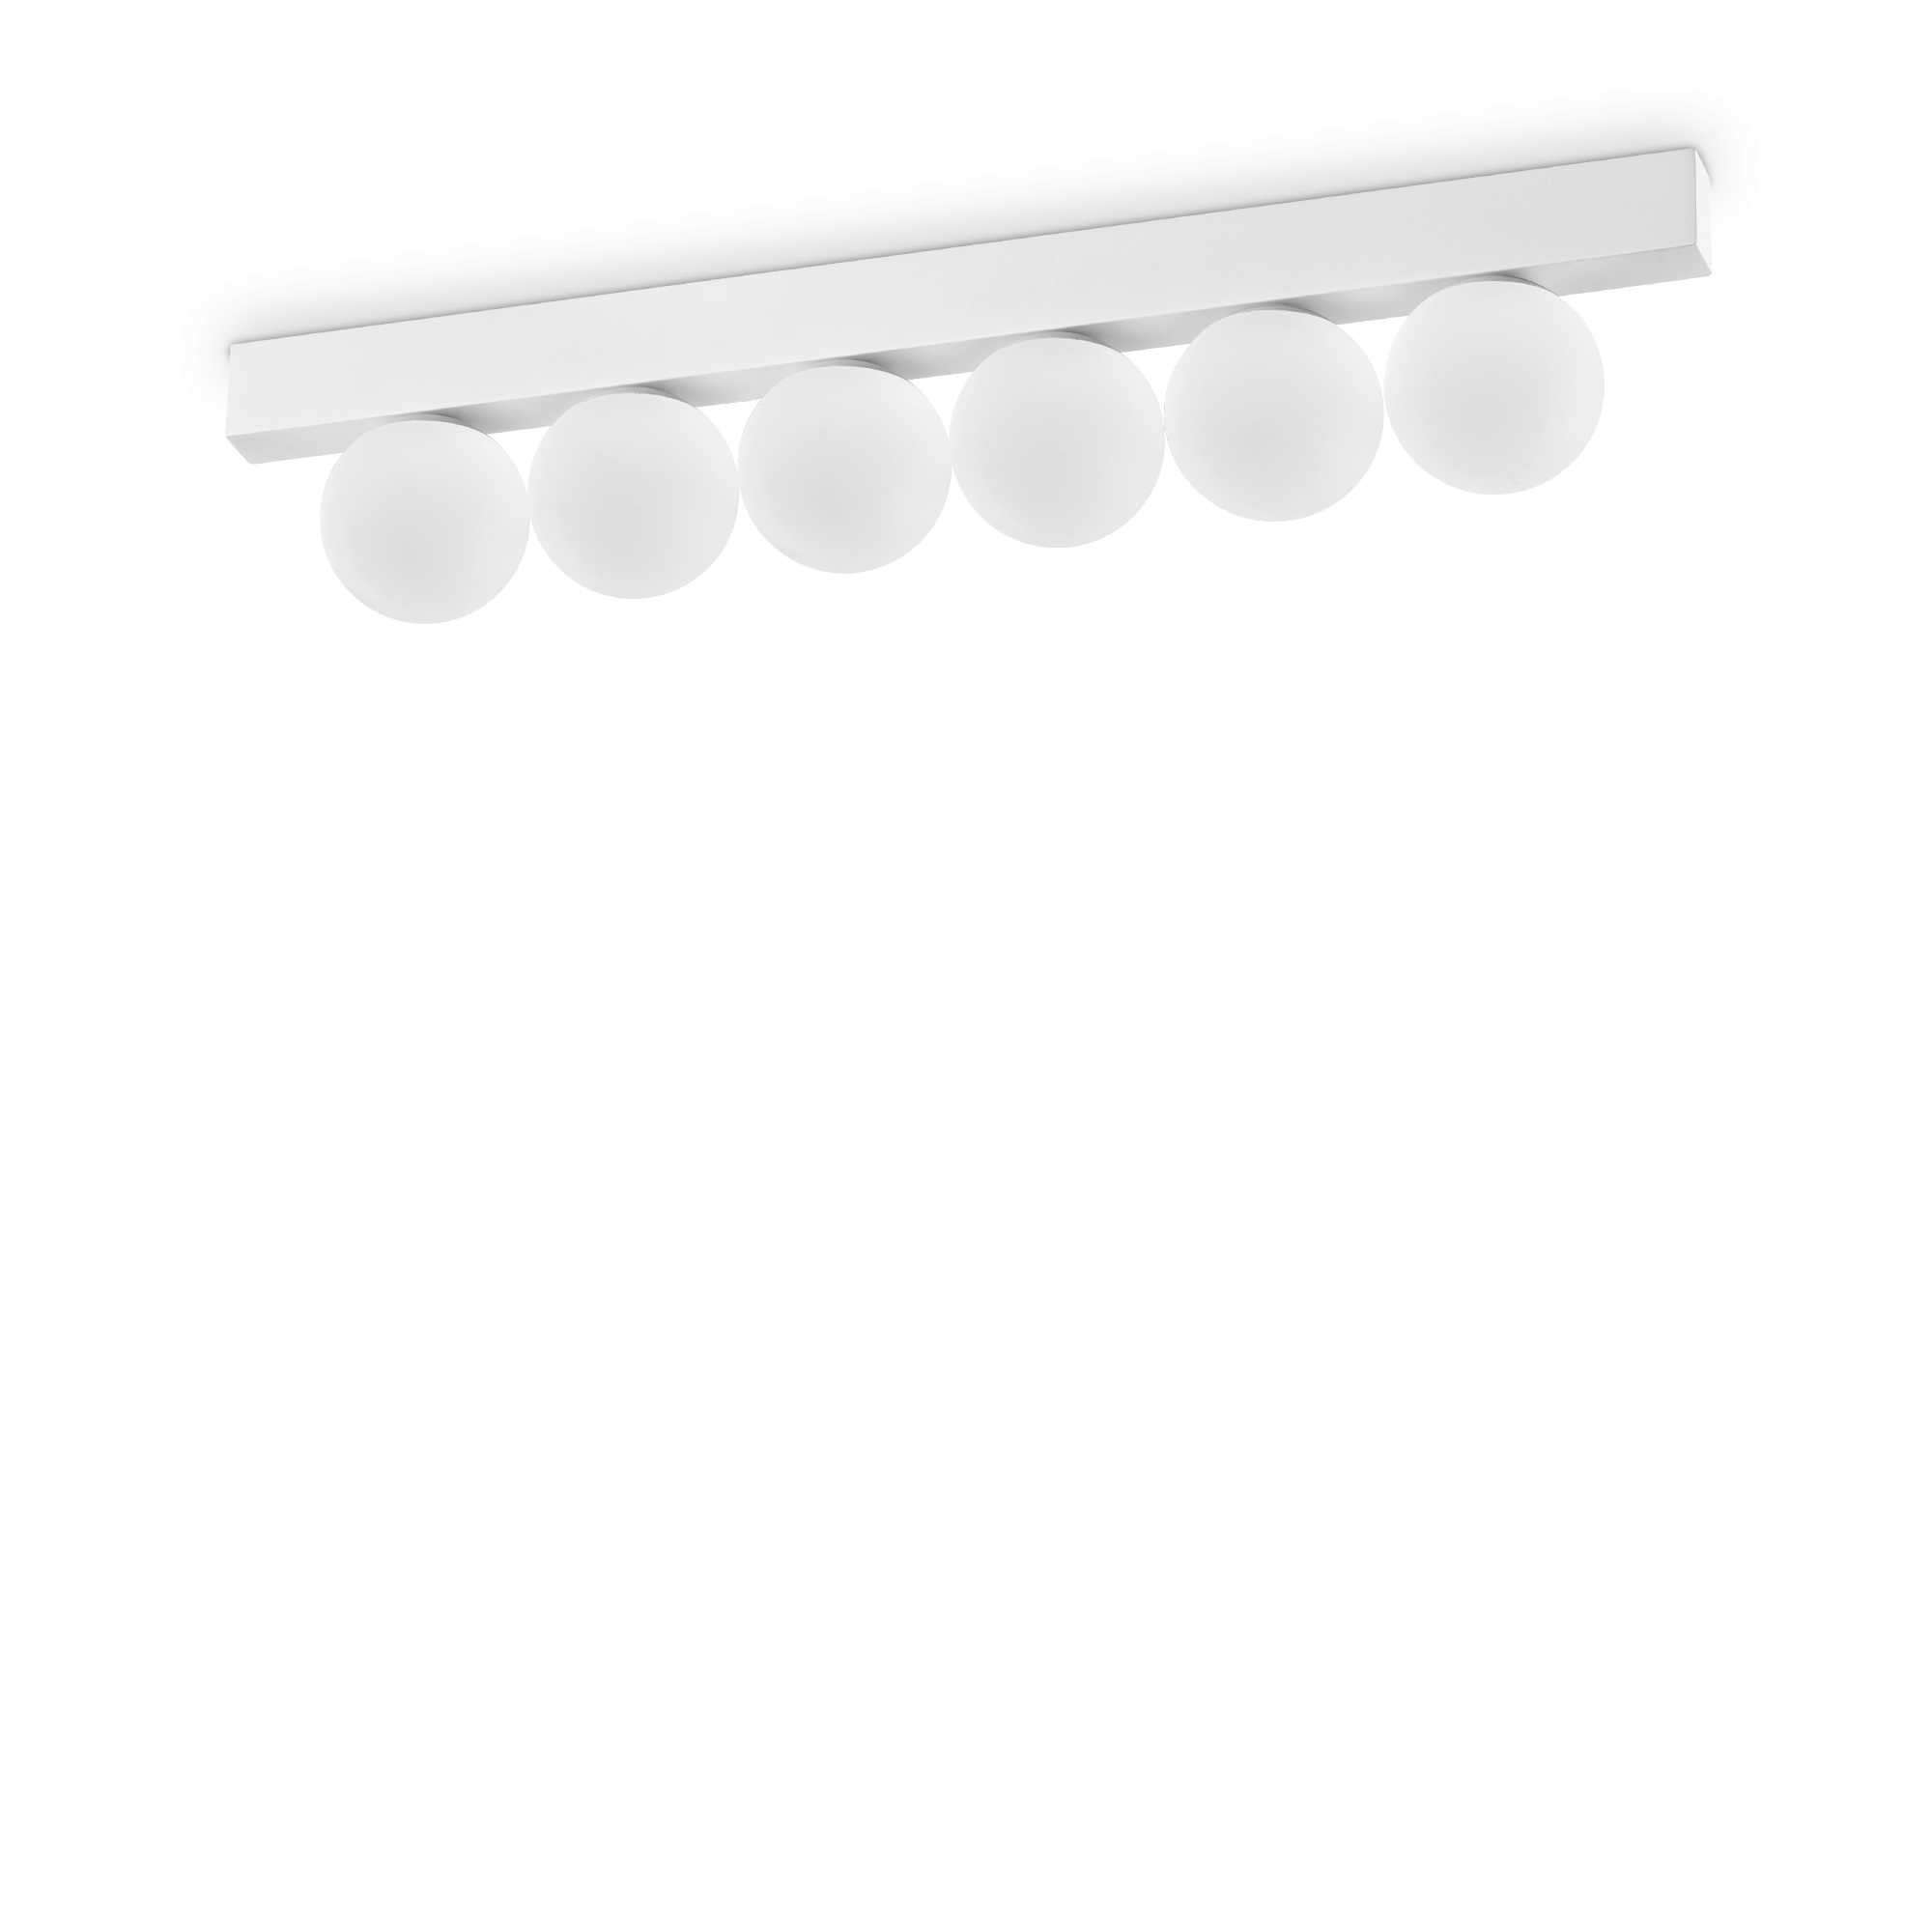 AD hotelska oprema Stropna lampa Ping pong pl6- Bijelo slika proizvoda